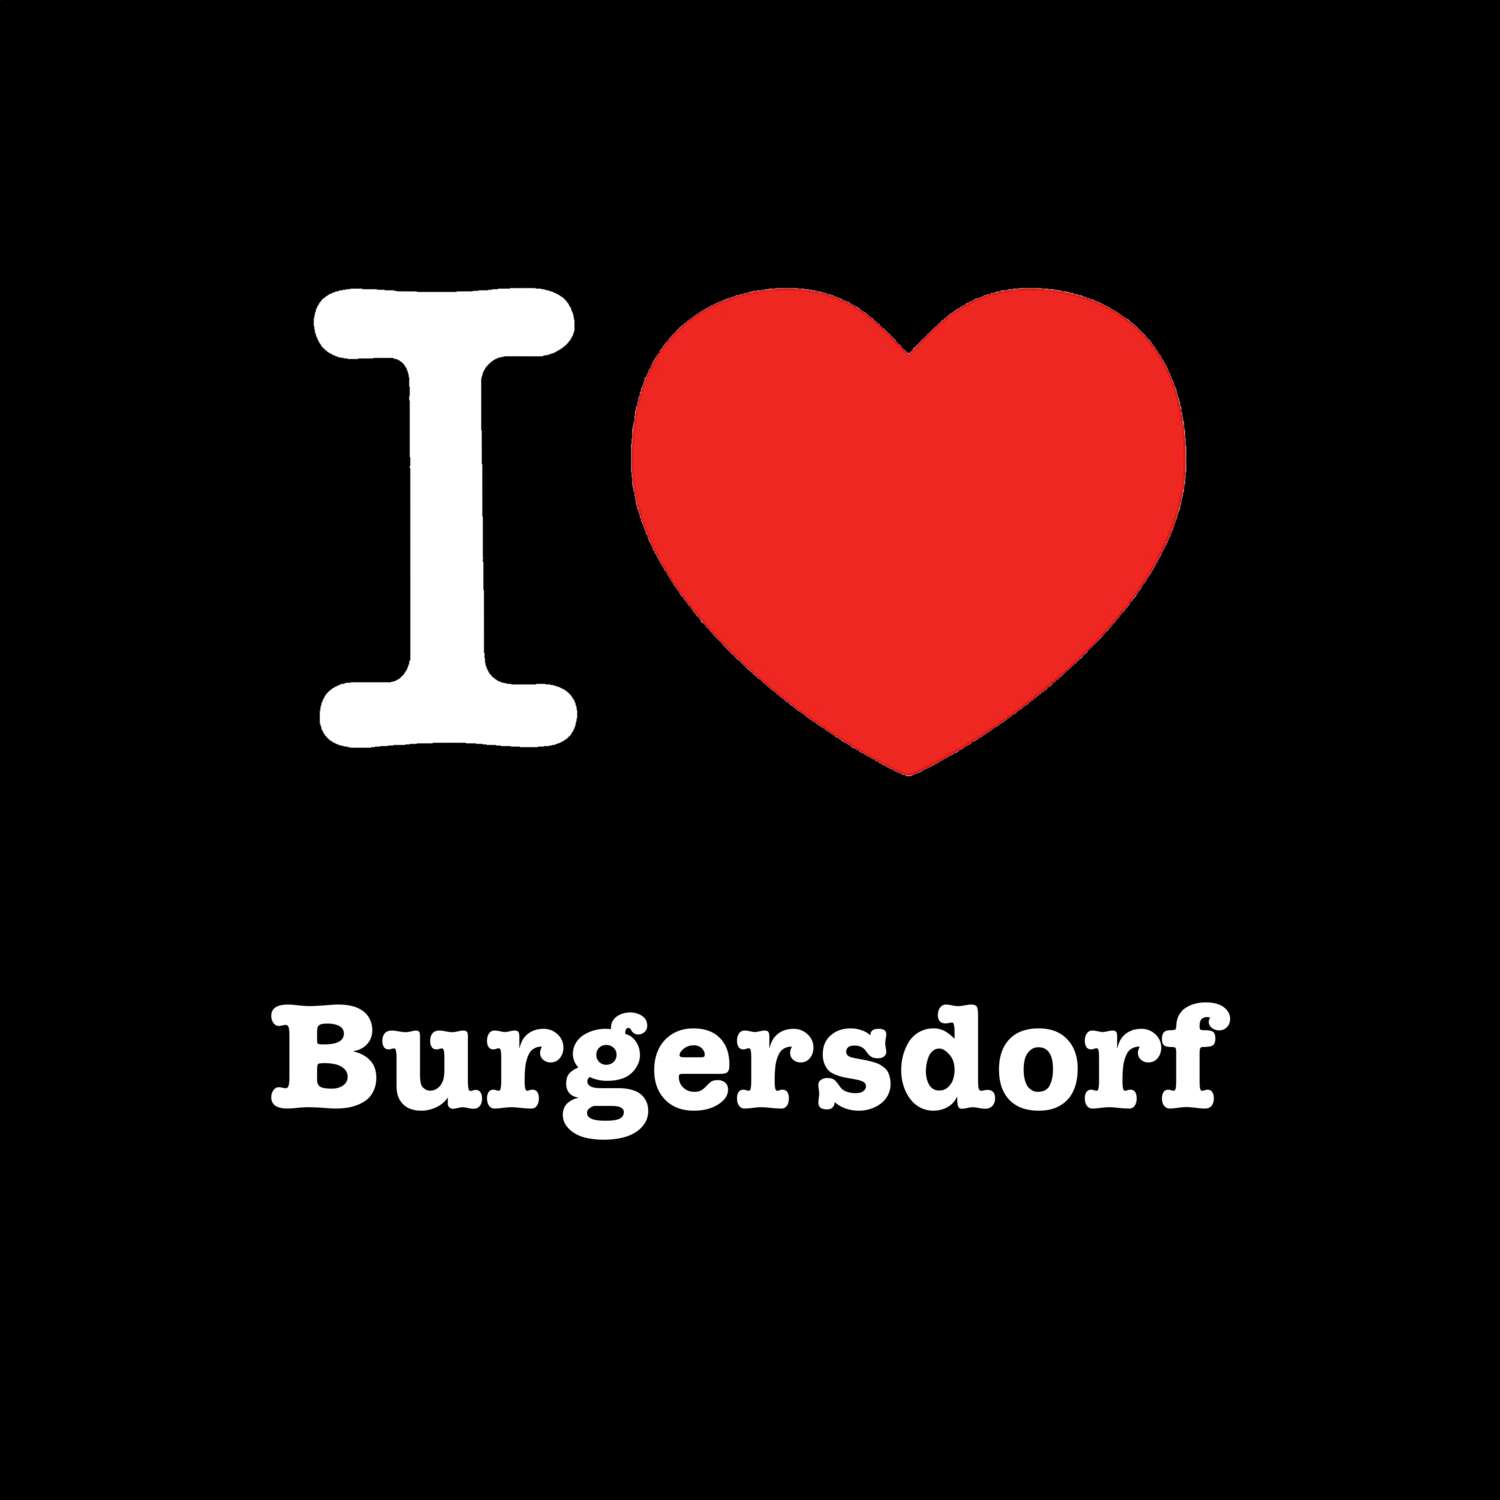 Burgersdorf T-Shirt »I love«